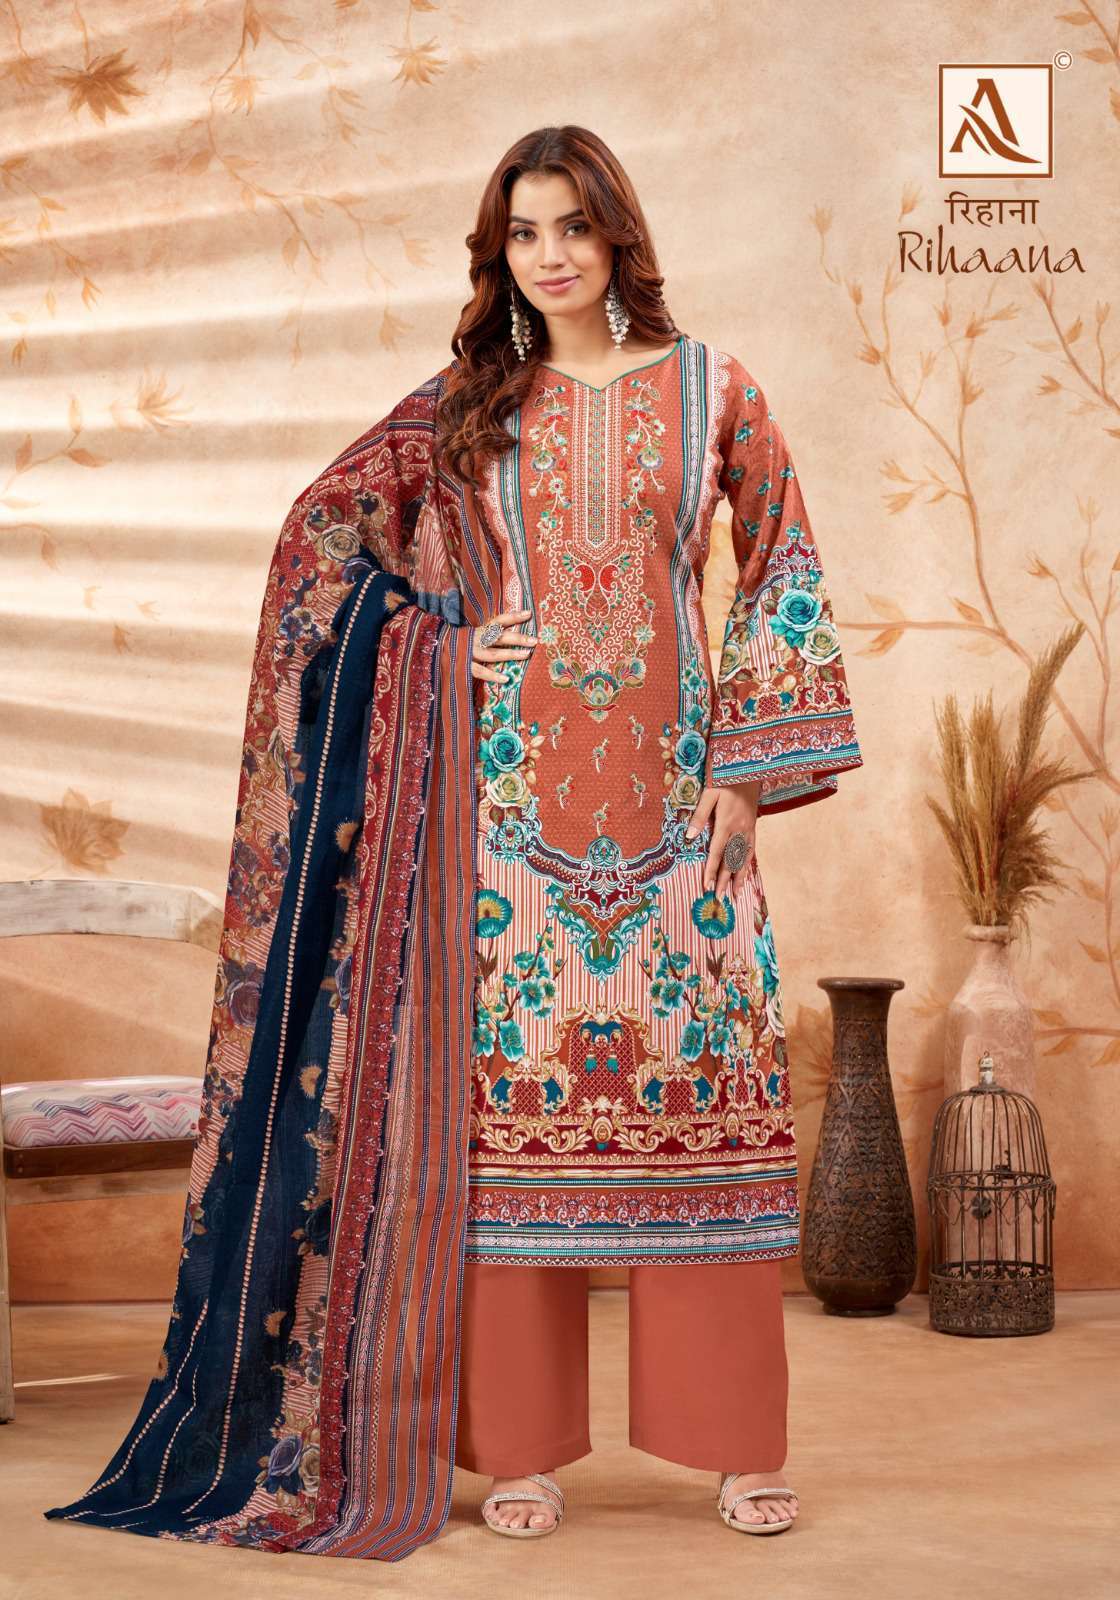 Alok Suit Rihaana Fancy Pakistani Print Cotton Suit Catalog Exporters